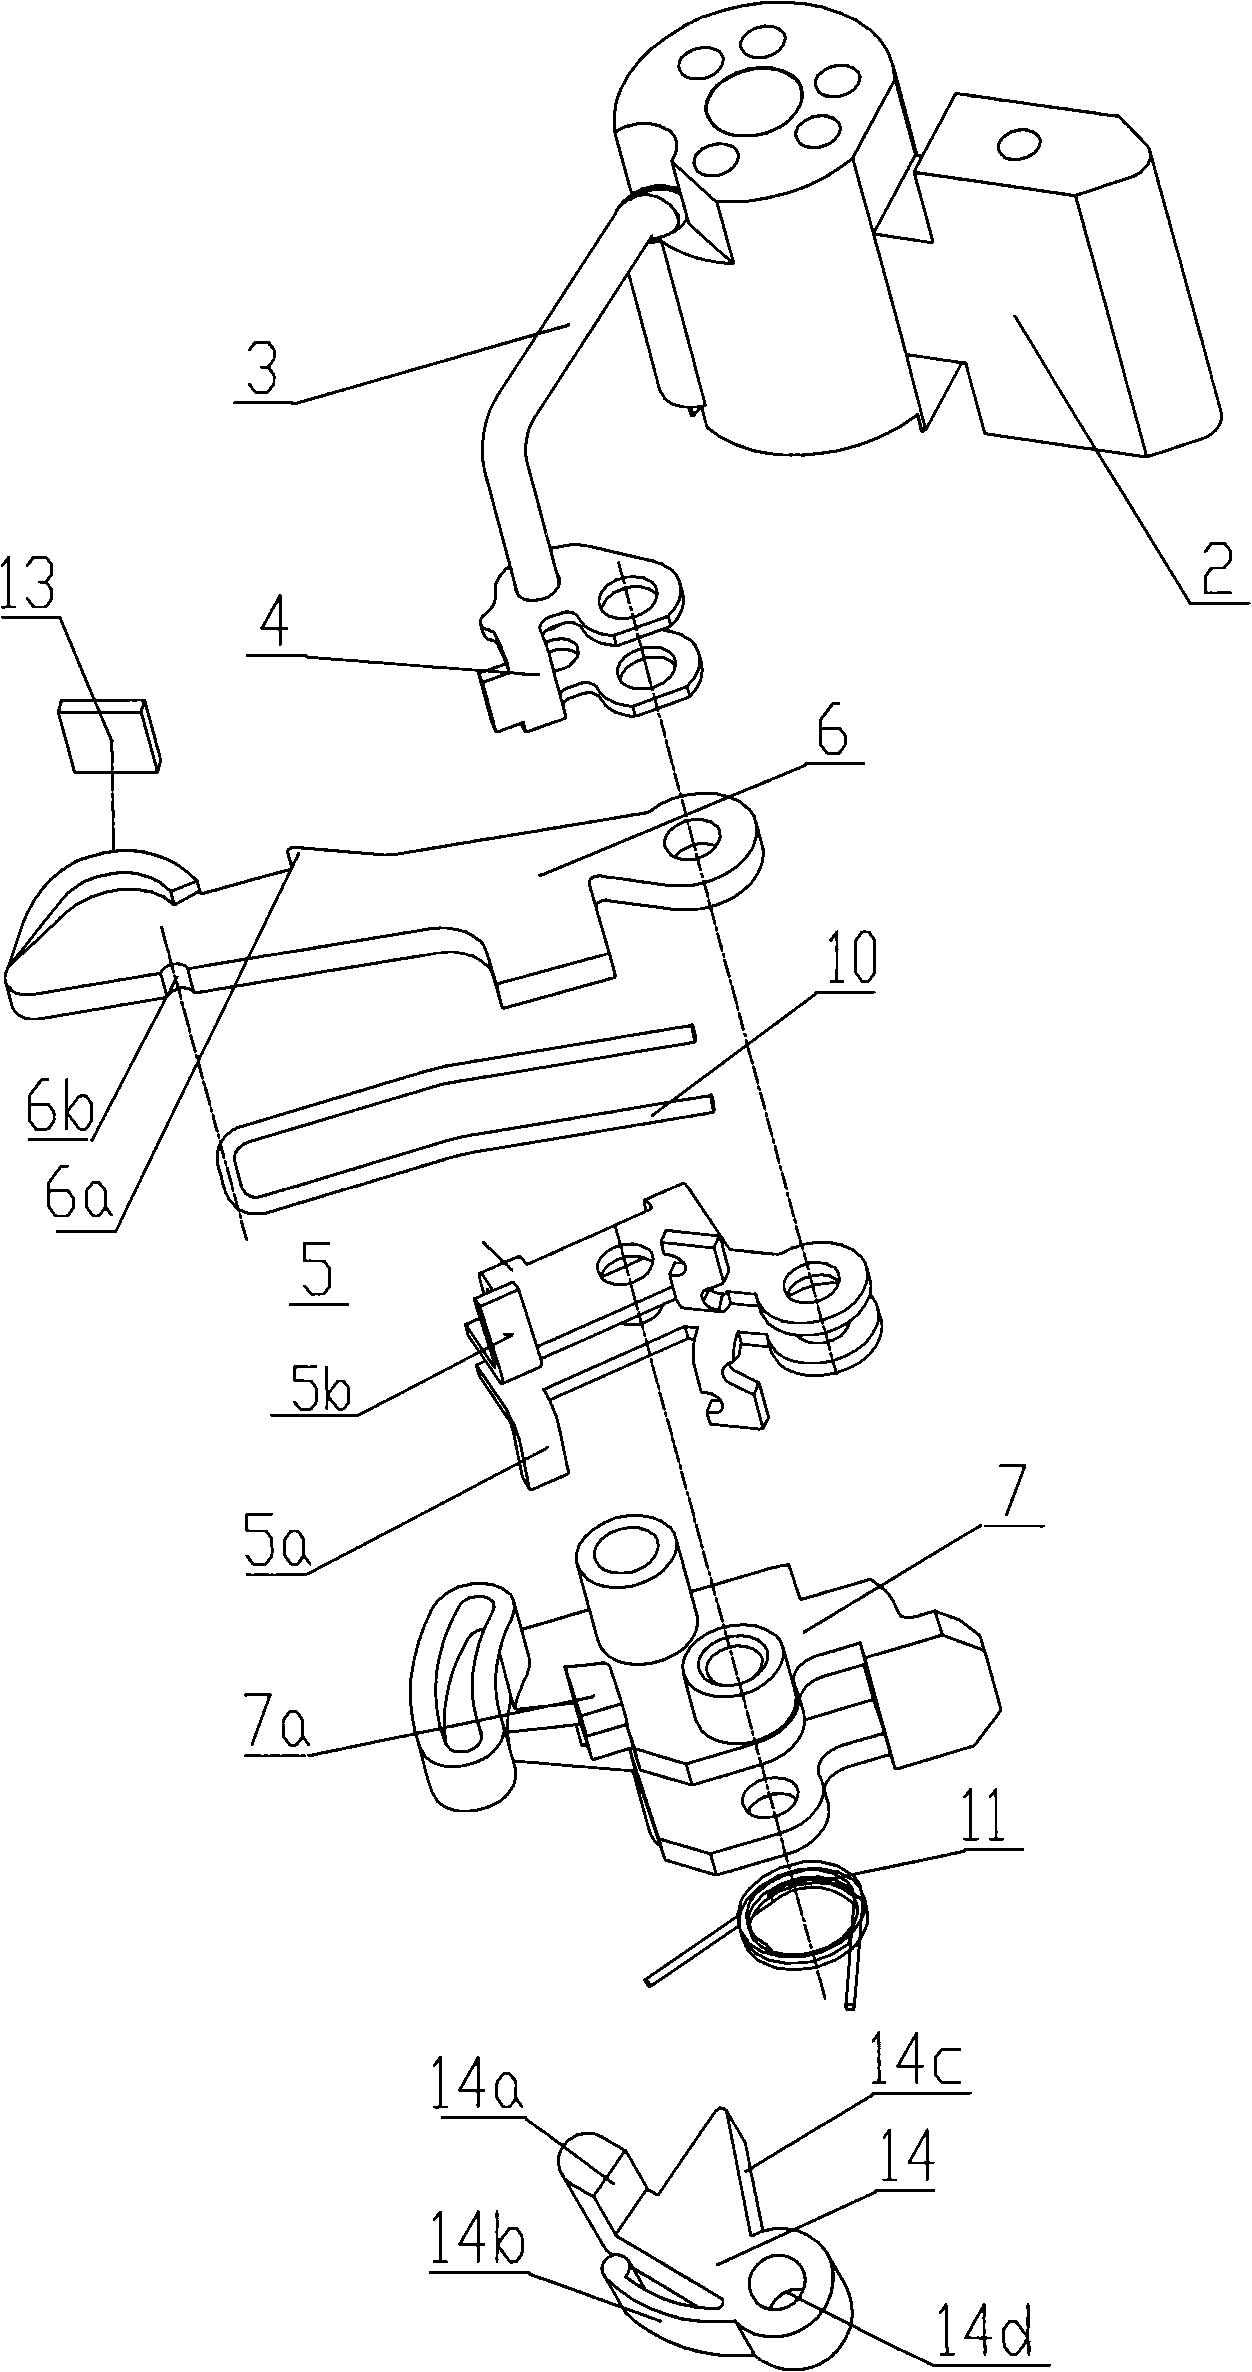 Fast closing mechanism of small circuit breaker